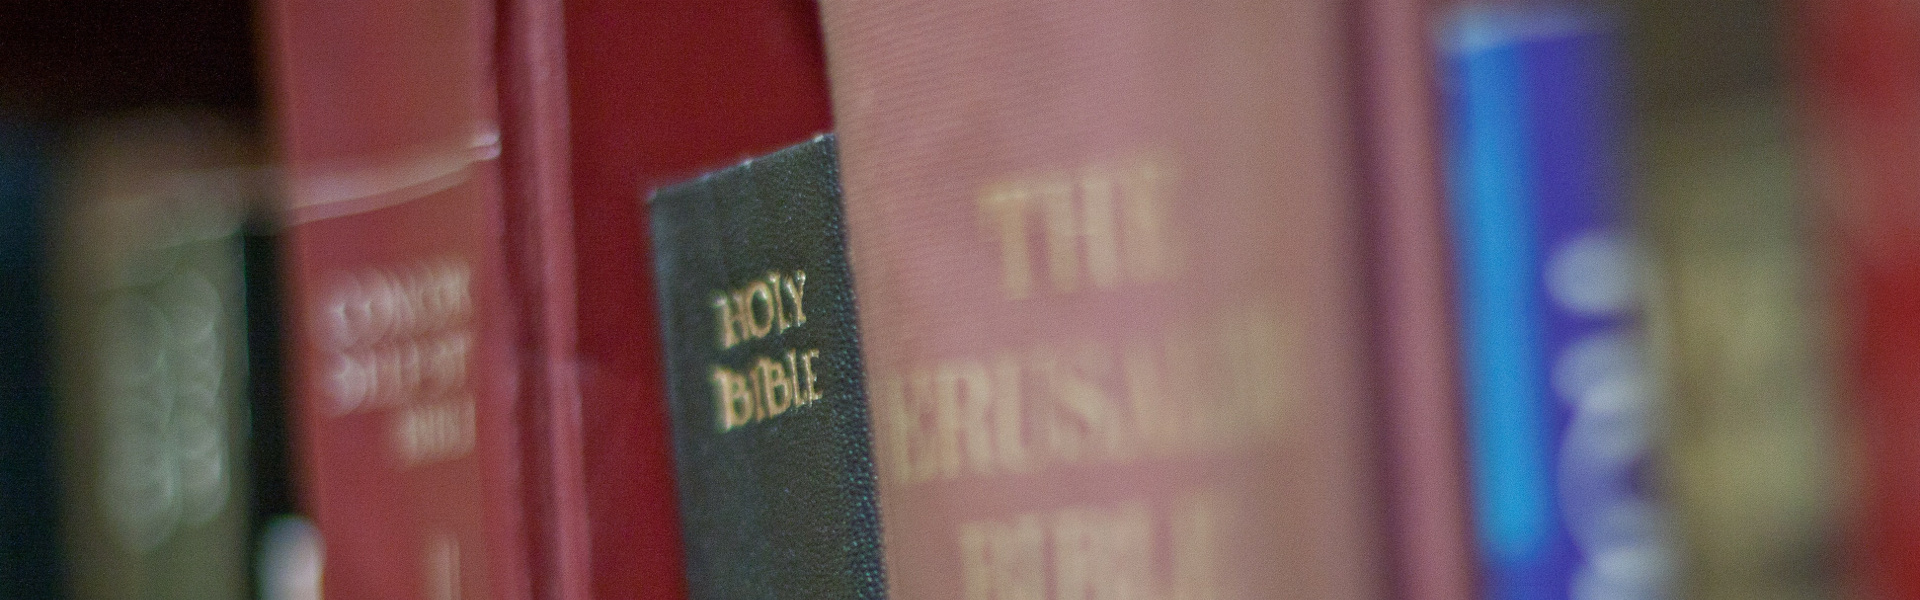 Bible on bookshelf among other books